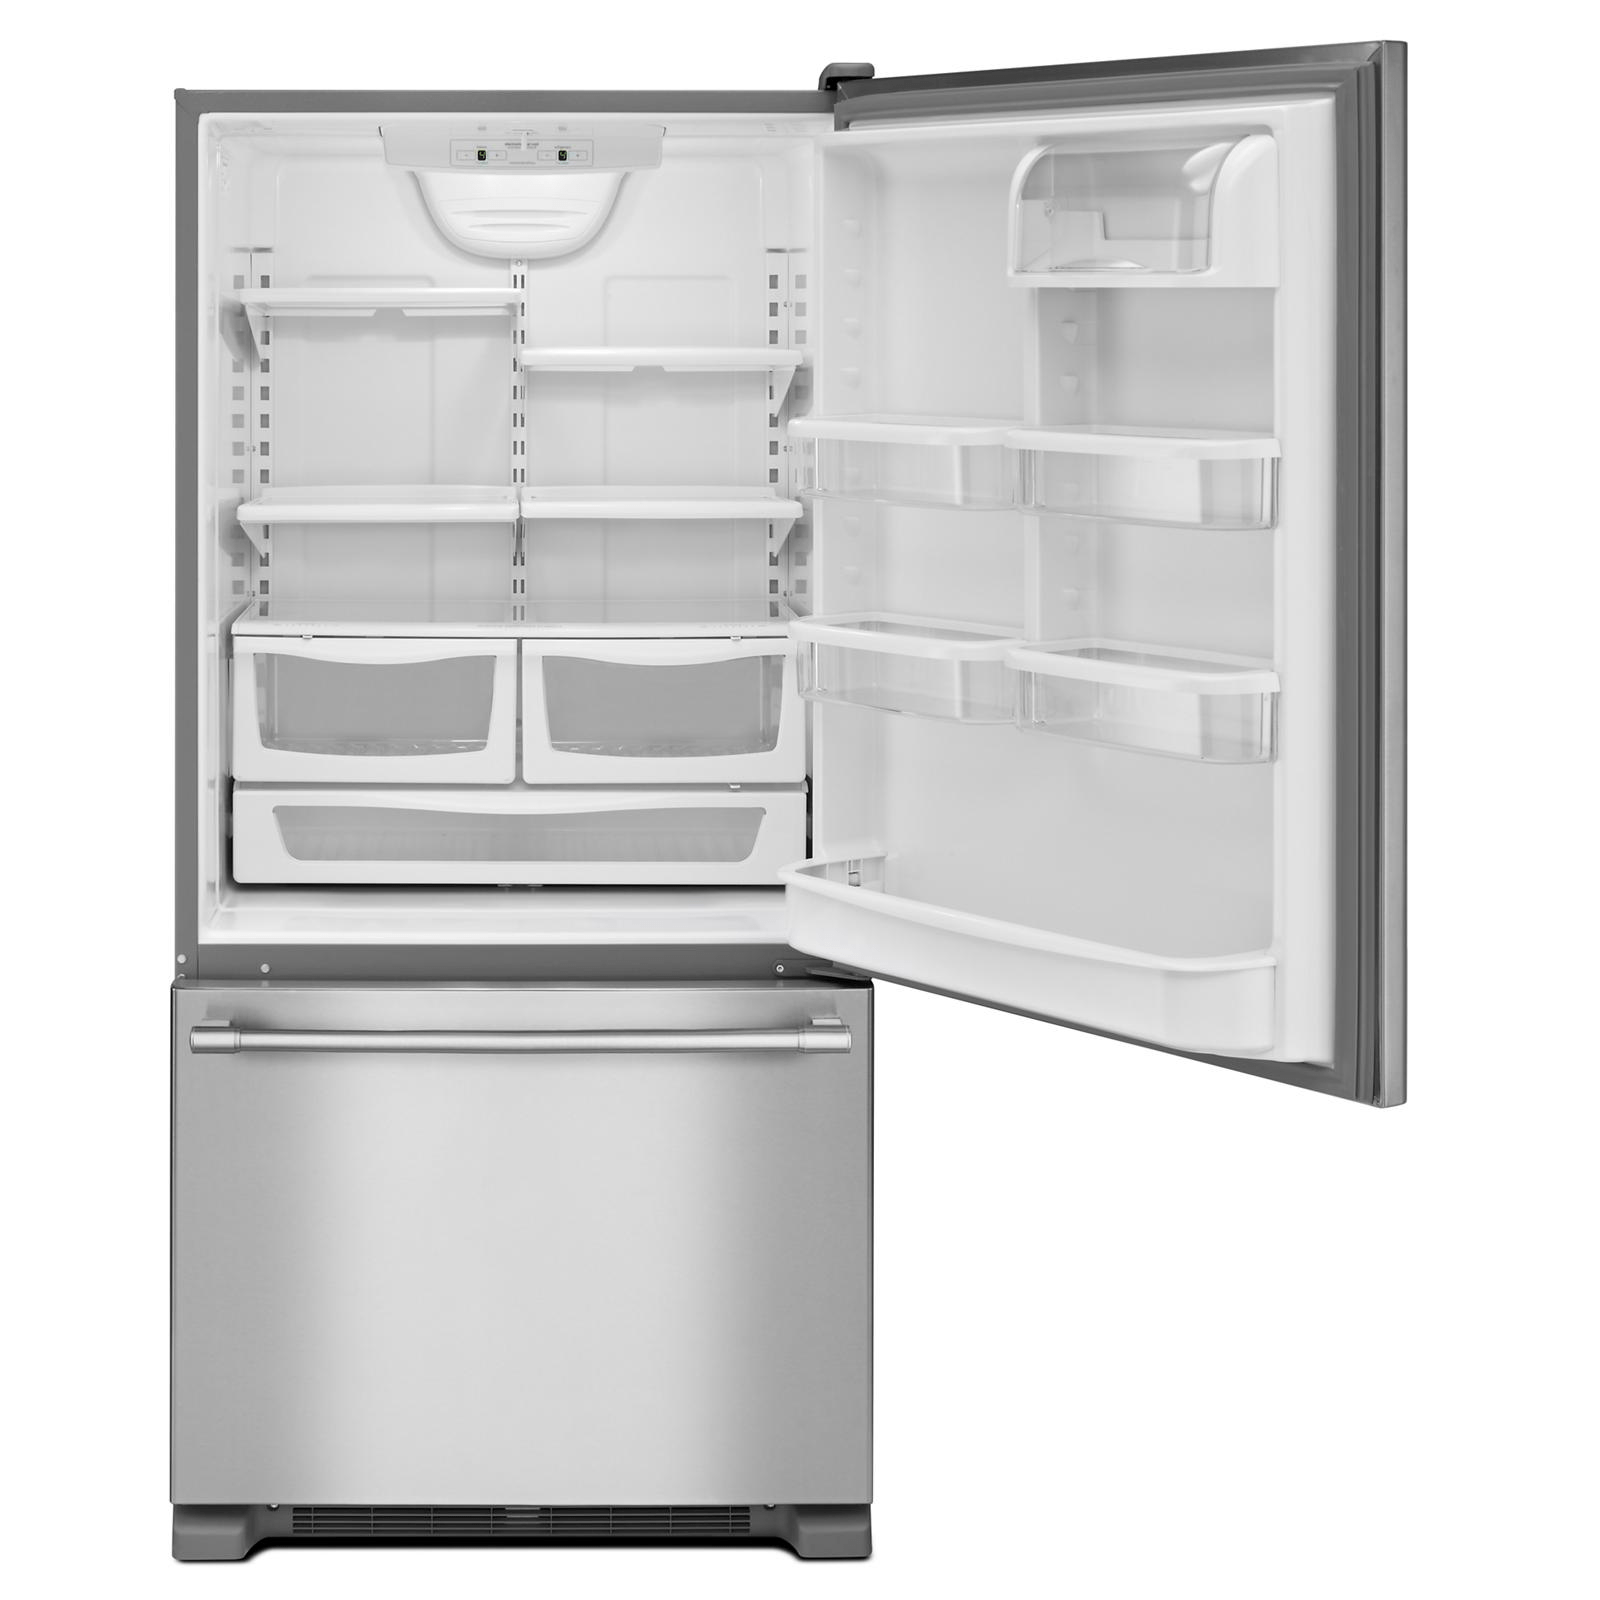 maytag-fridge-open